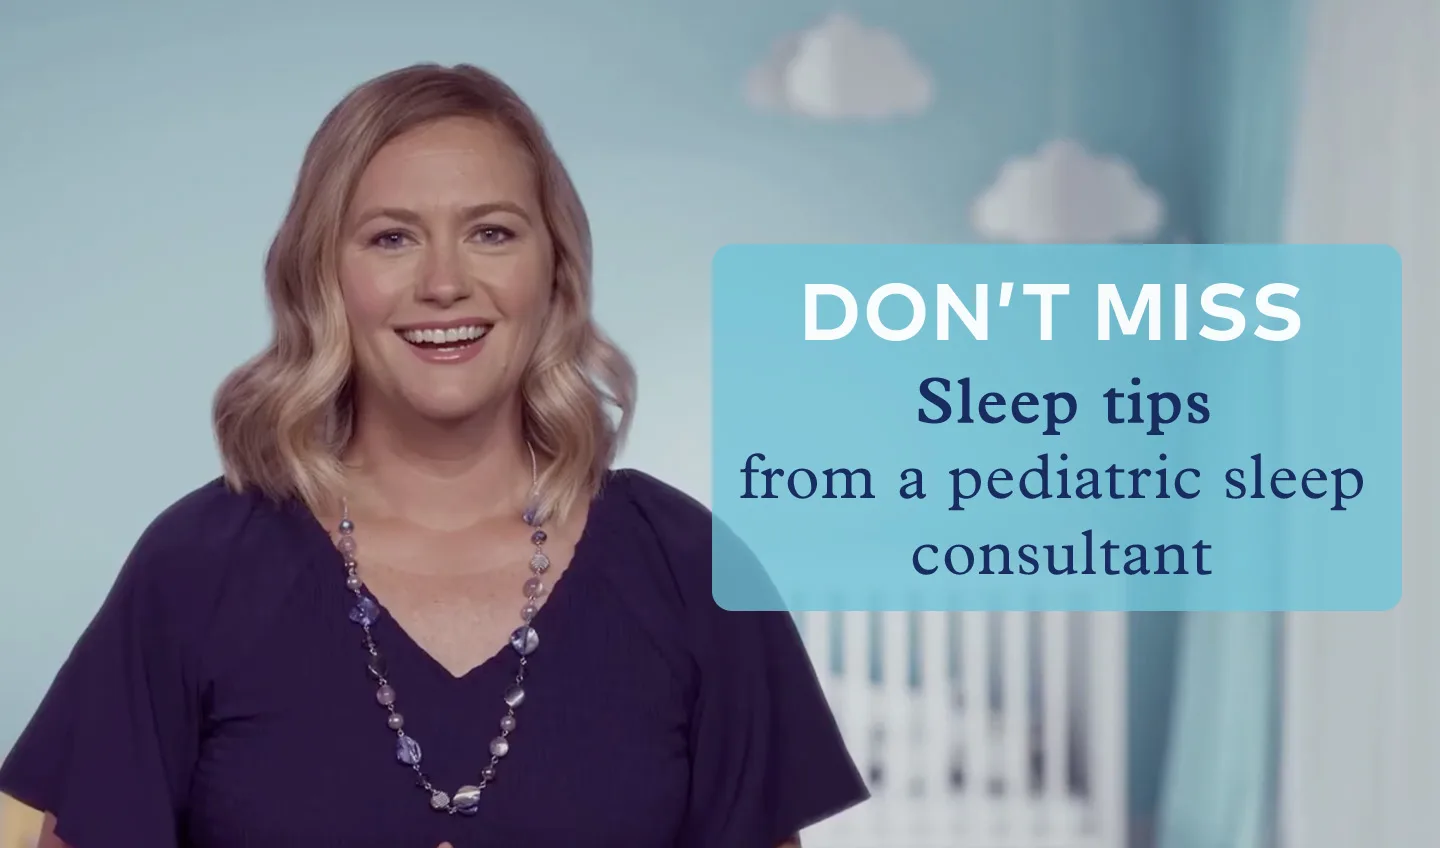 How to Sleep on Your Back - Sleep Advisor